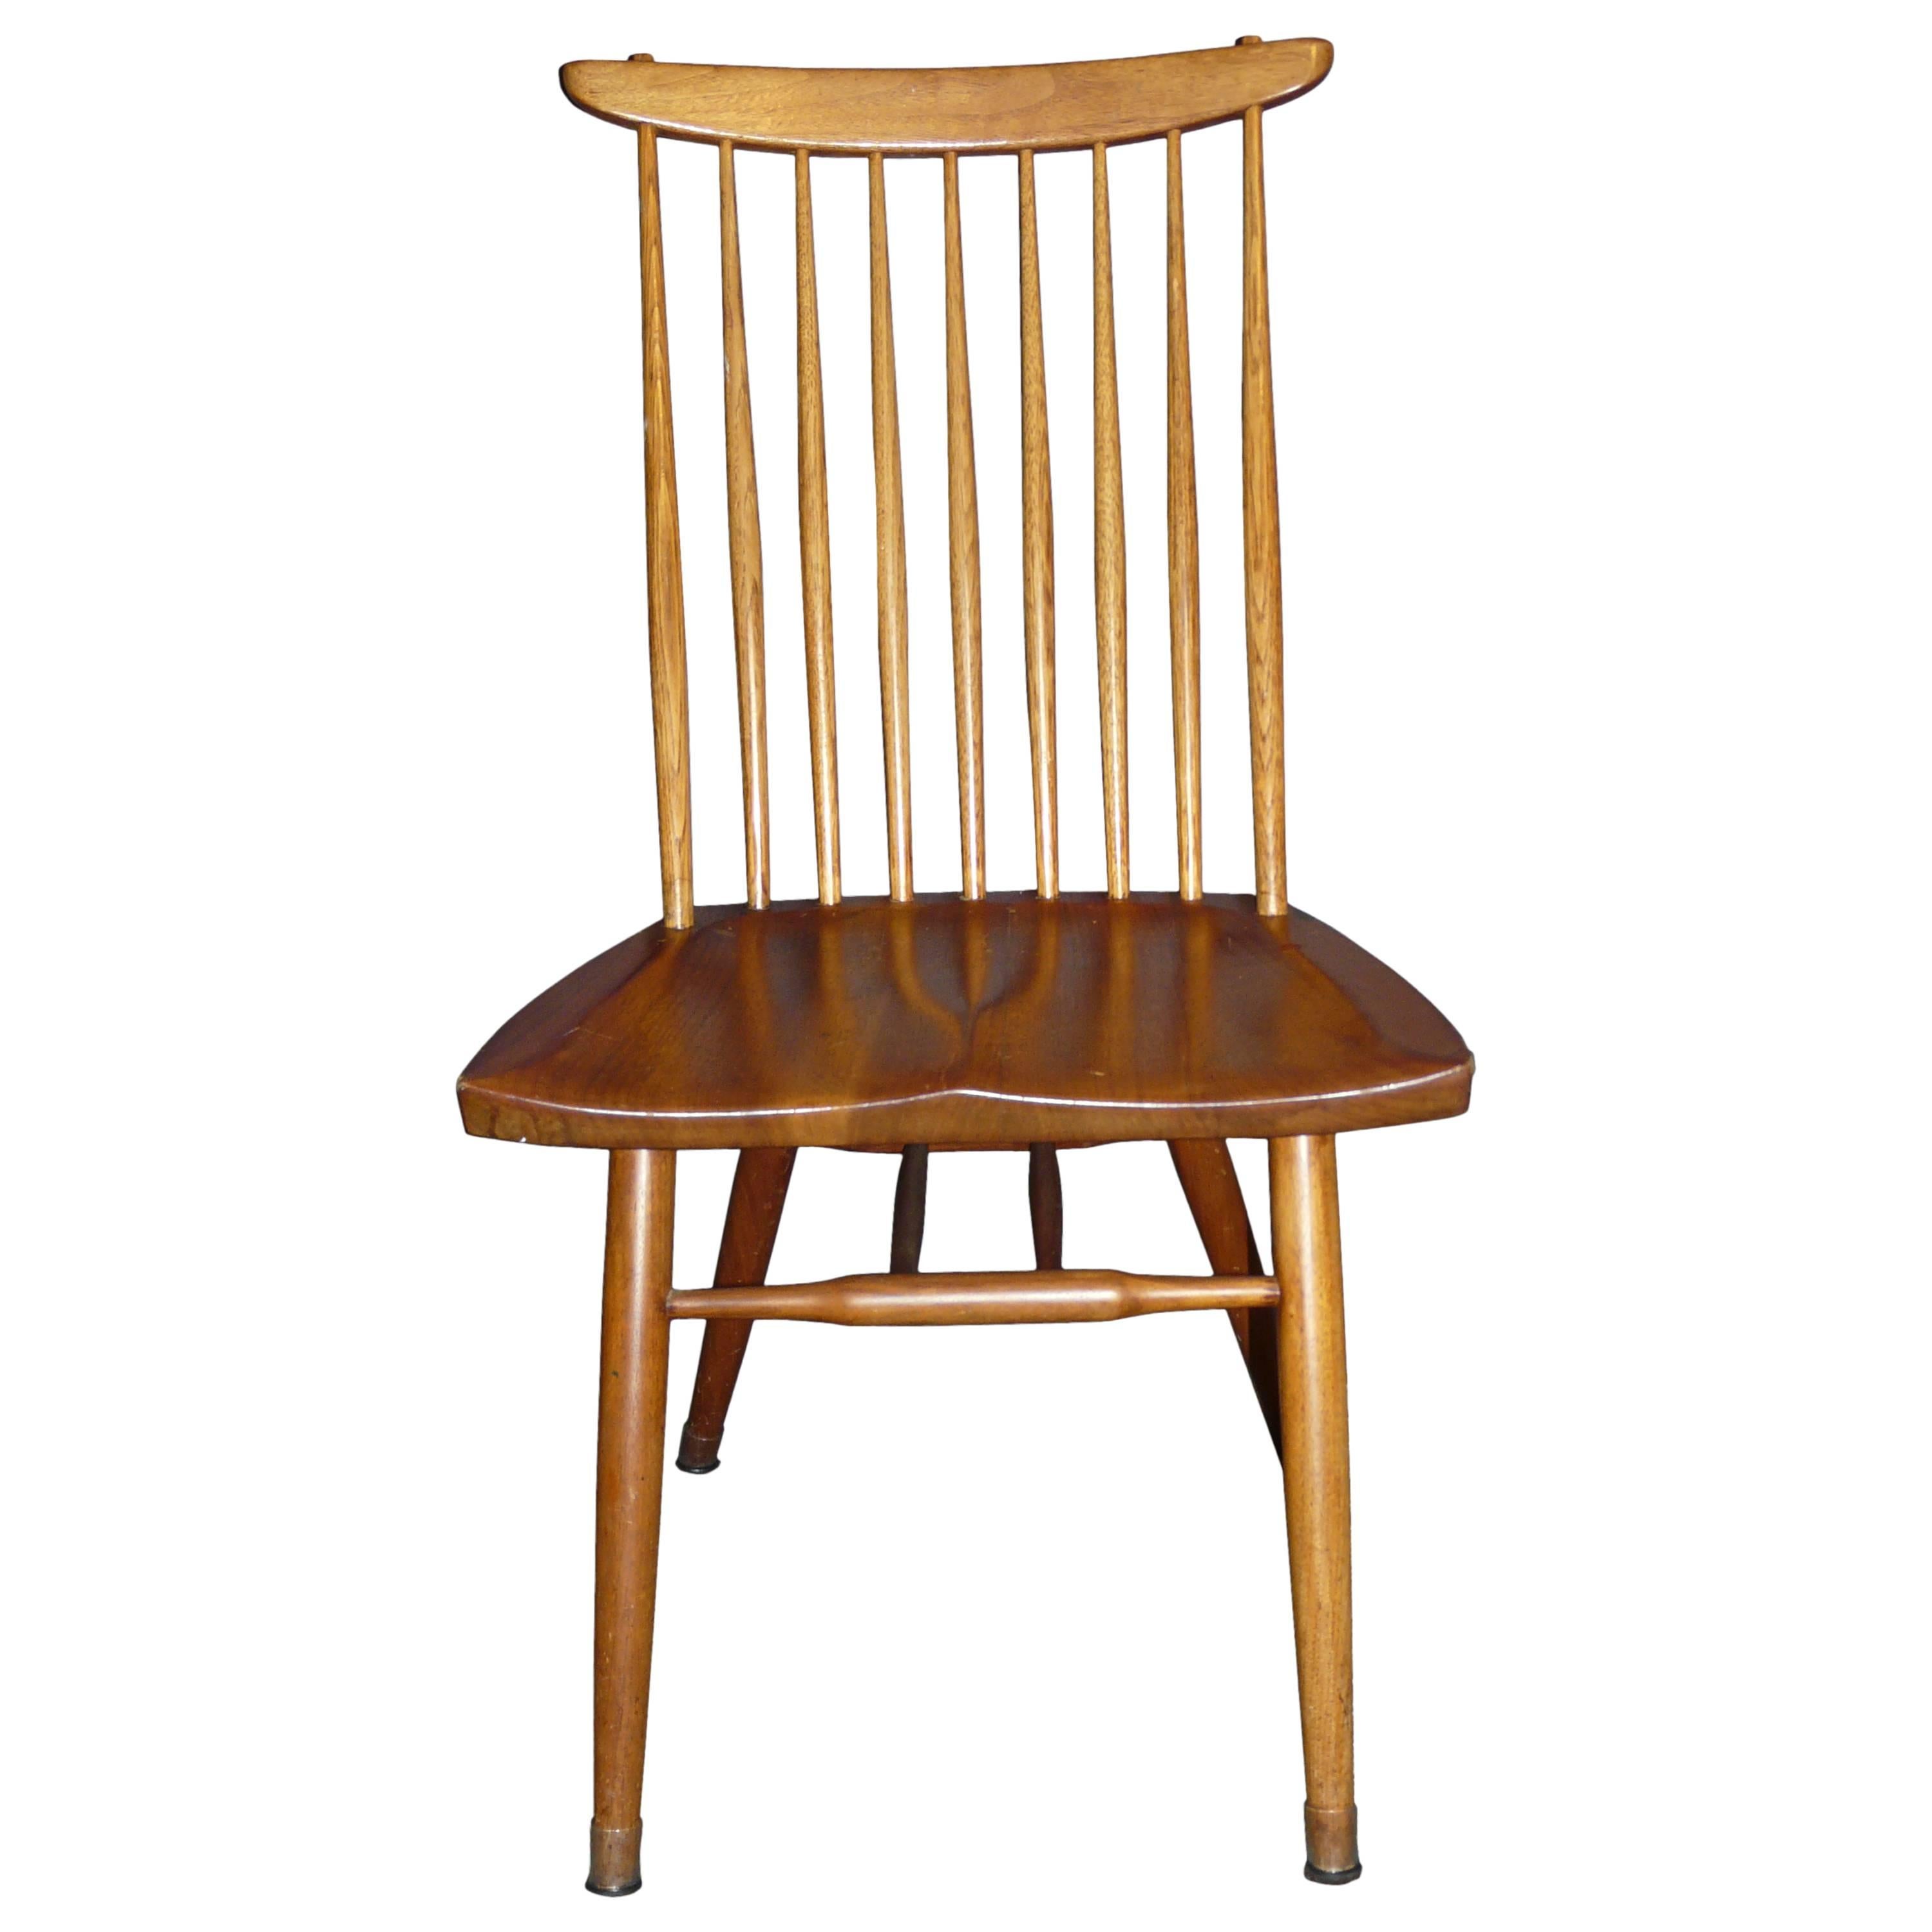 George Nakashima "New Chair"